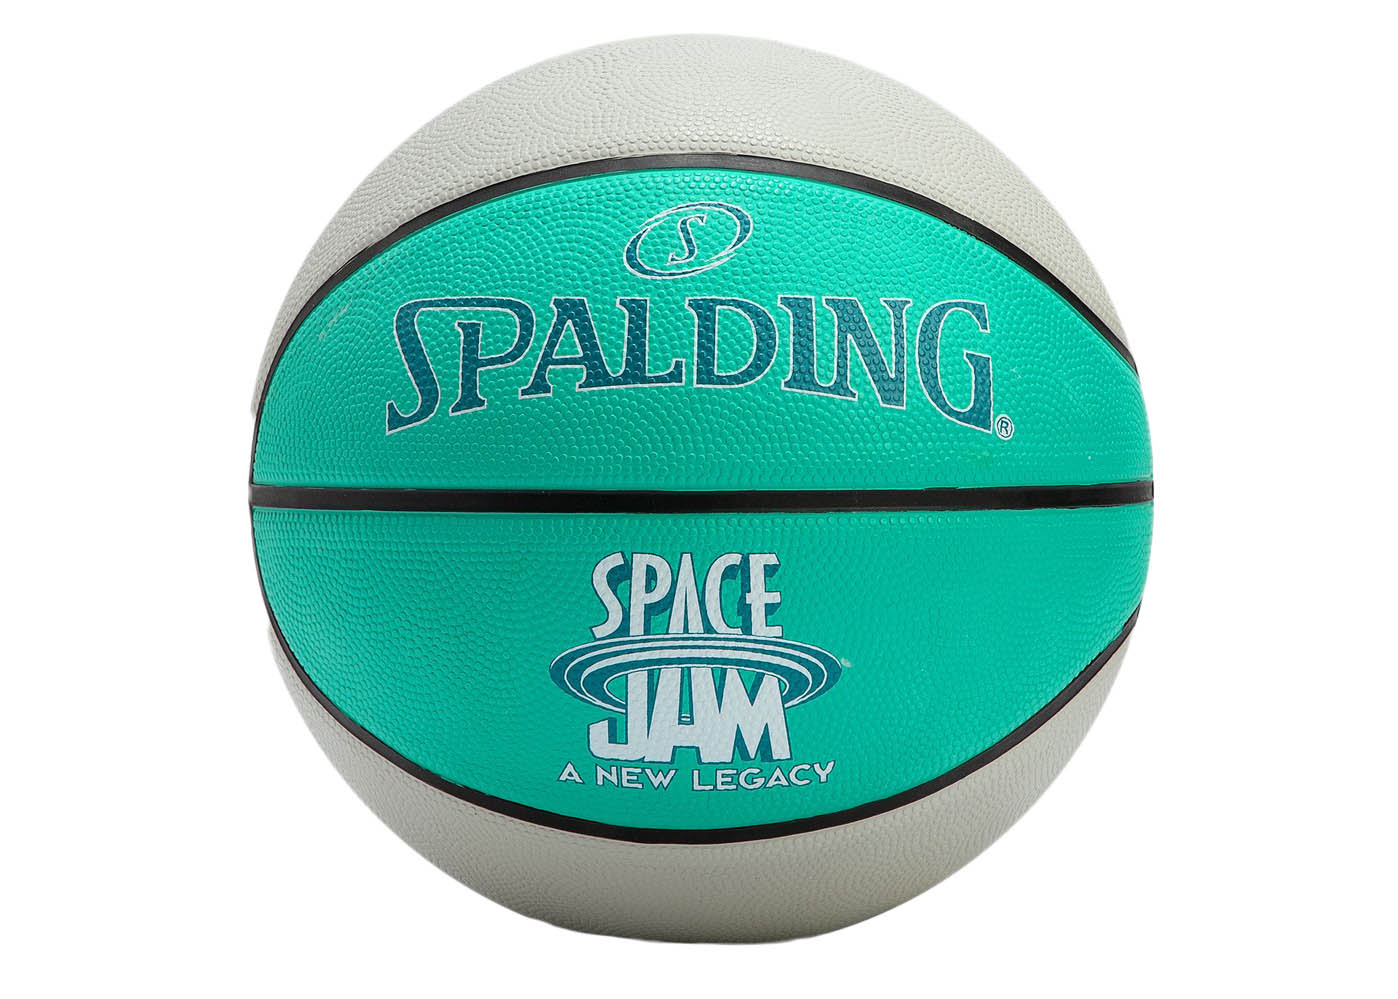 Spalding Sports Championship Pump FREE Shipping USA Seller 